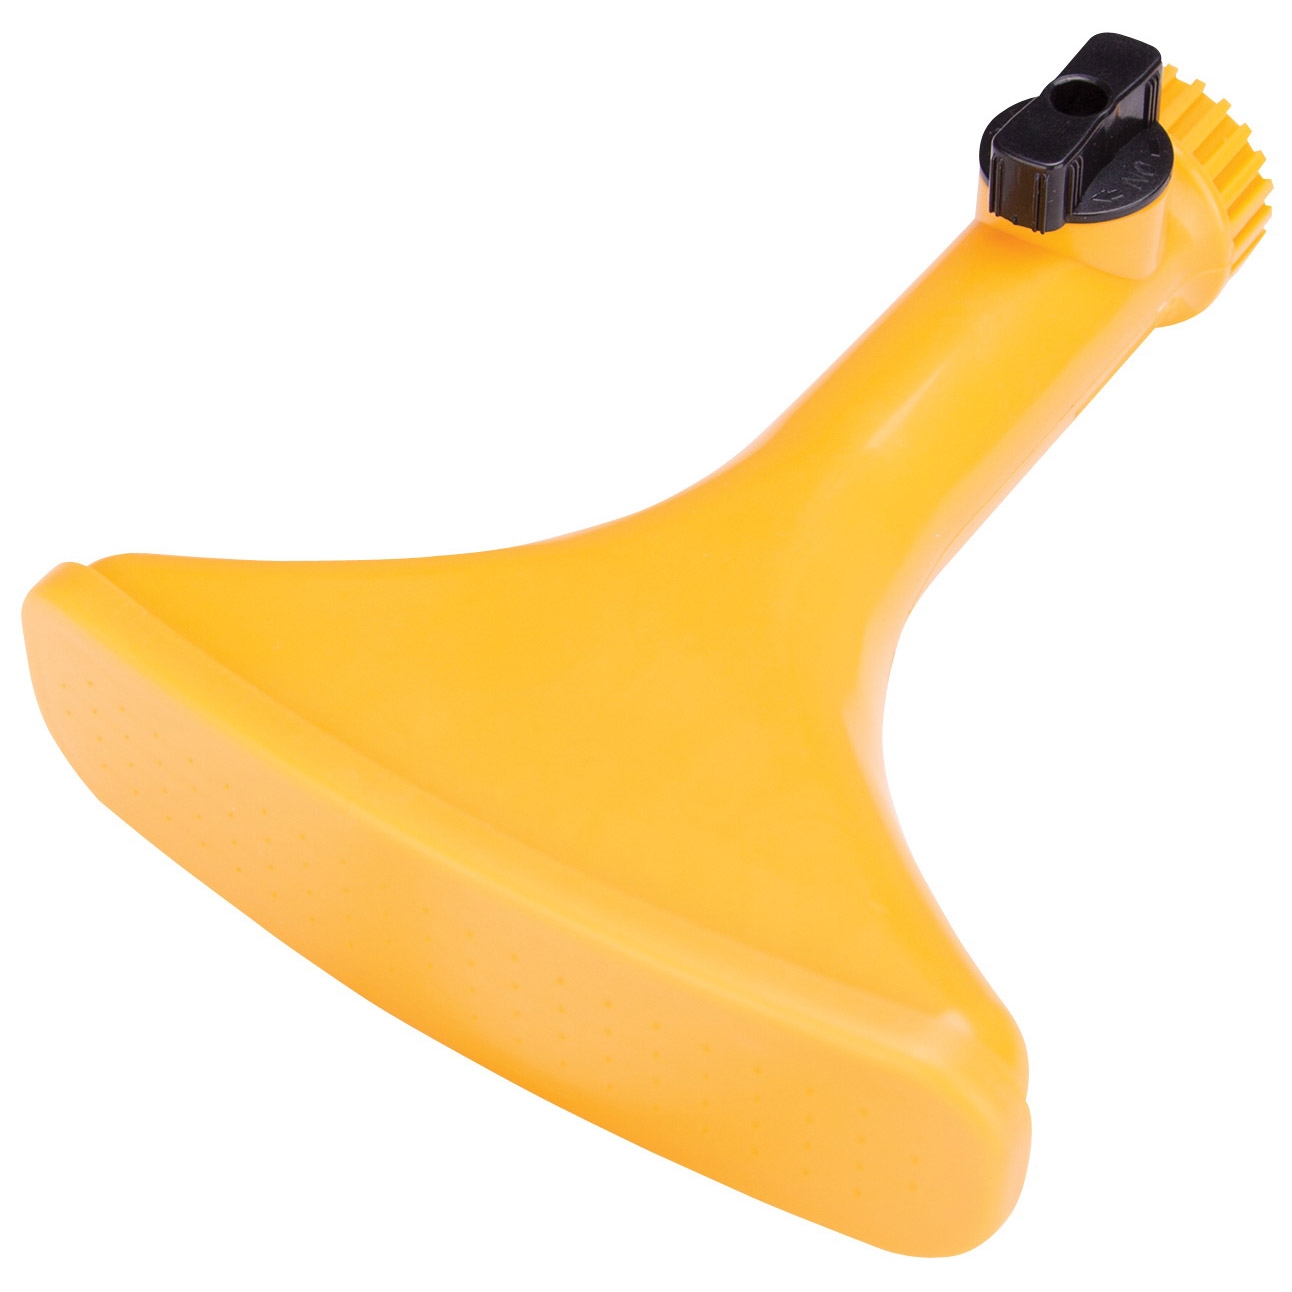 GN37070 Spray Nozzle, Female, Plastic, Yellow